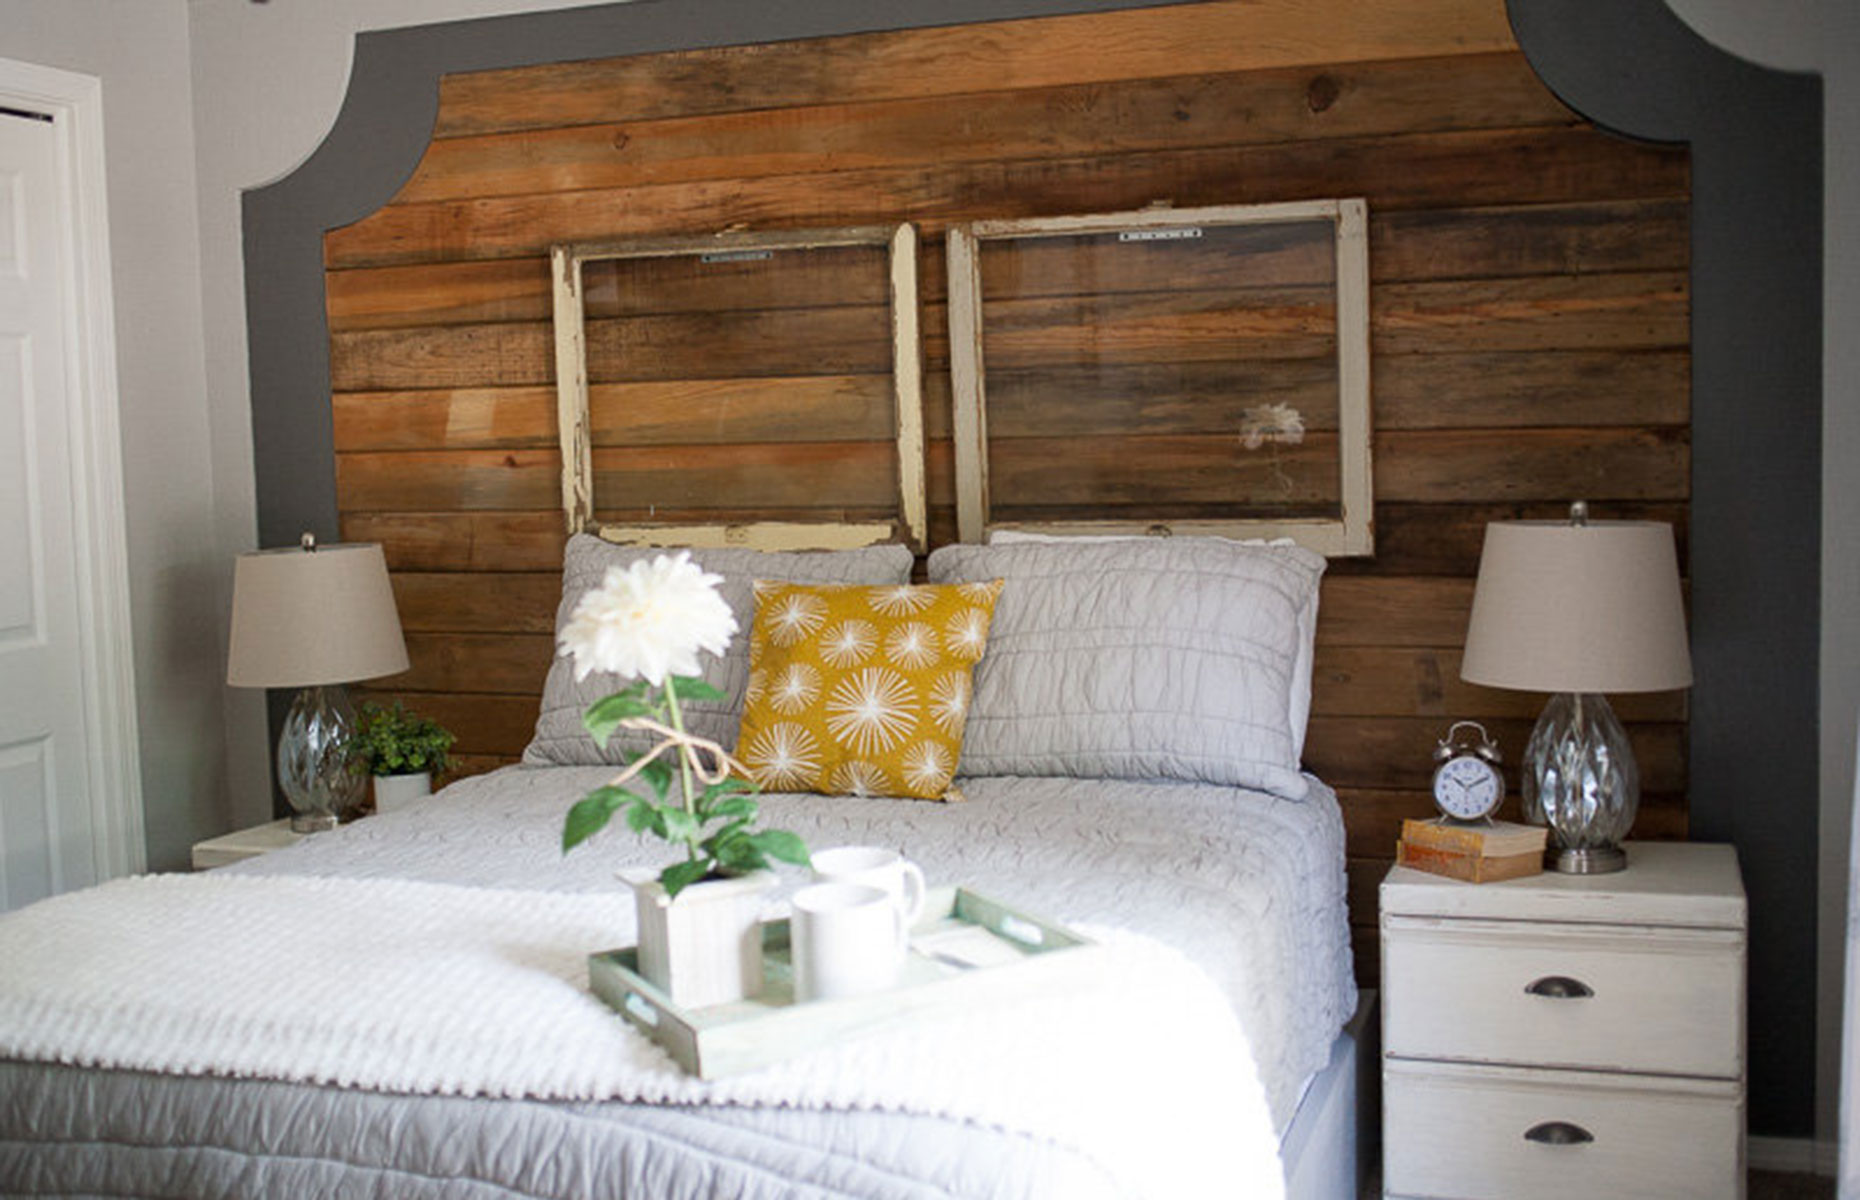 Bedroom at the Lazy Z resort (Image: Courtesy of High Sierra/Visit Tuolumne County/Lazy Z)